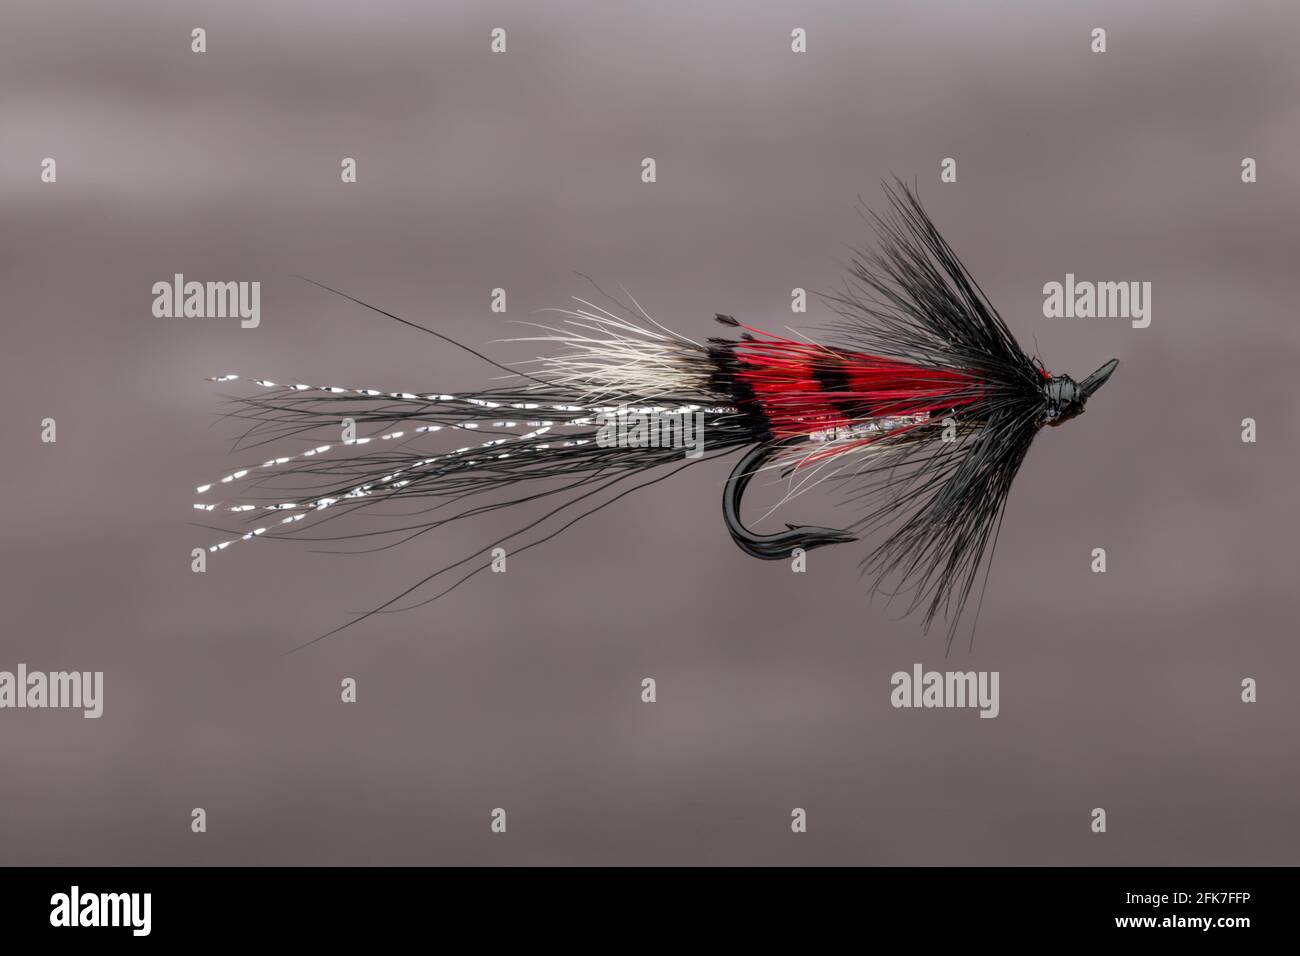 Atlantic Salmon fishing fly an Ally's Black double Shrimp fly Stock Photo